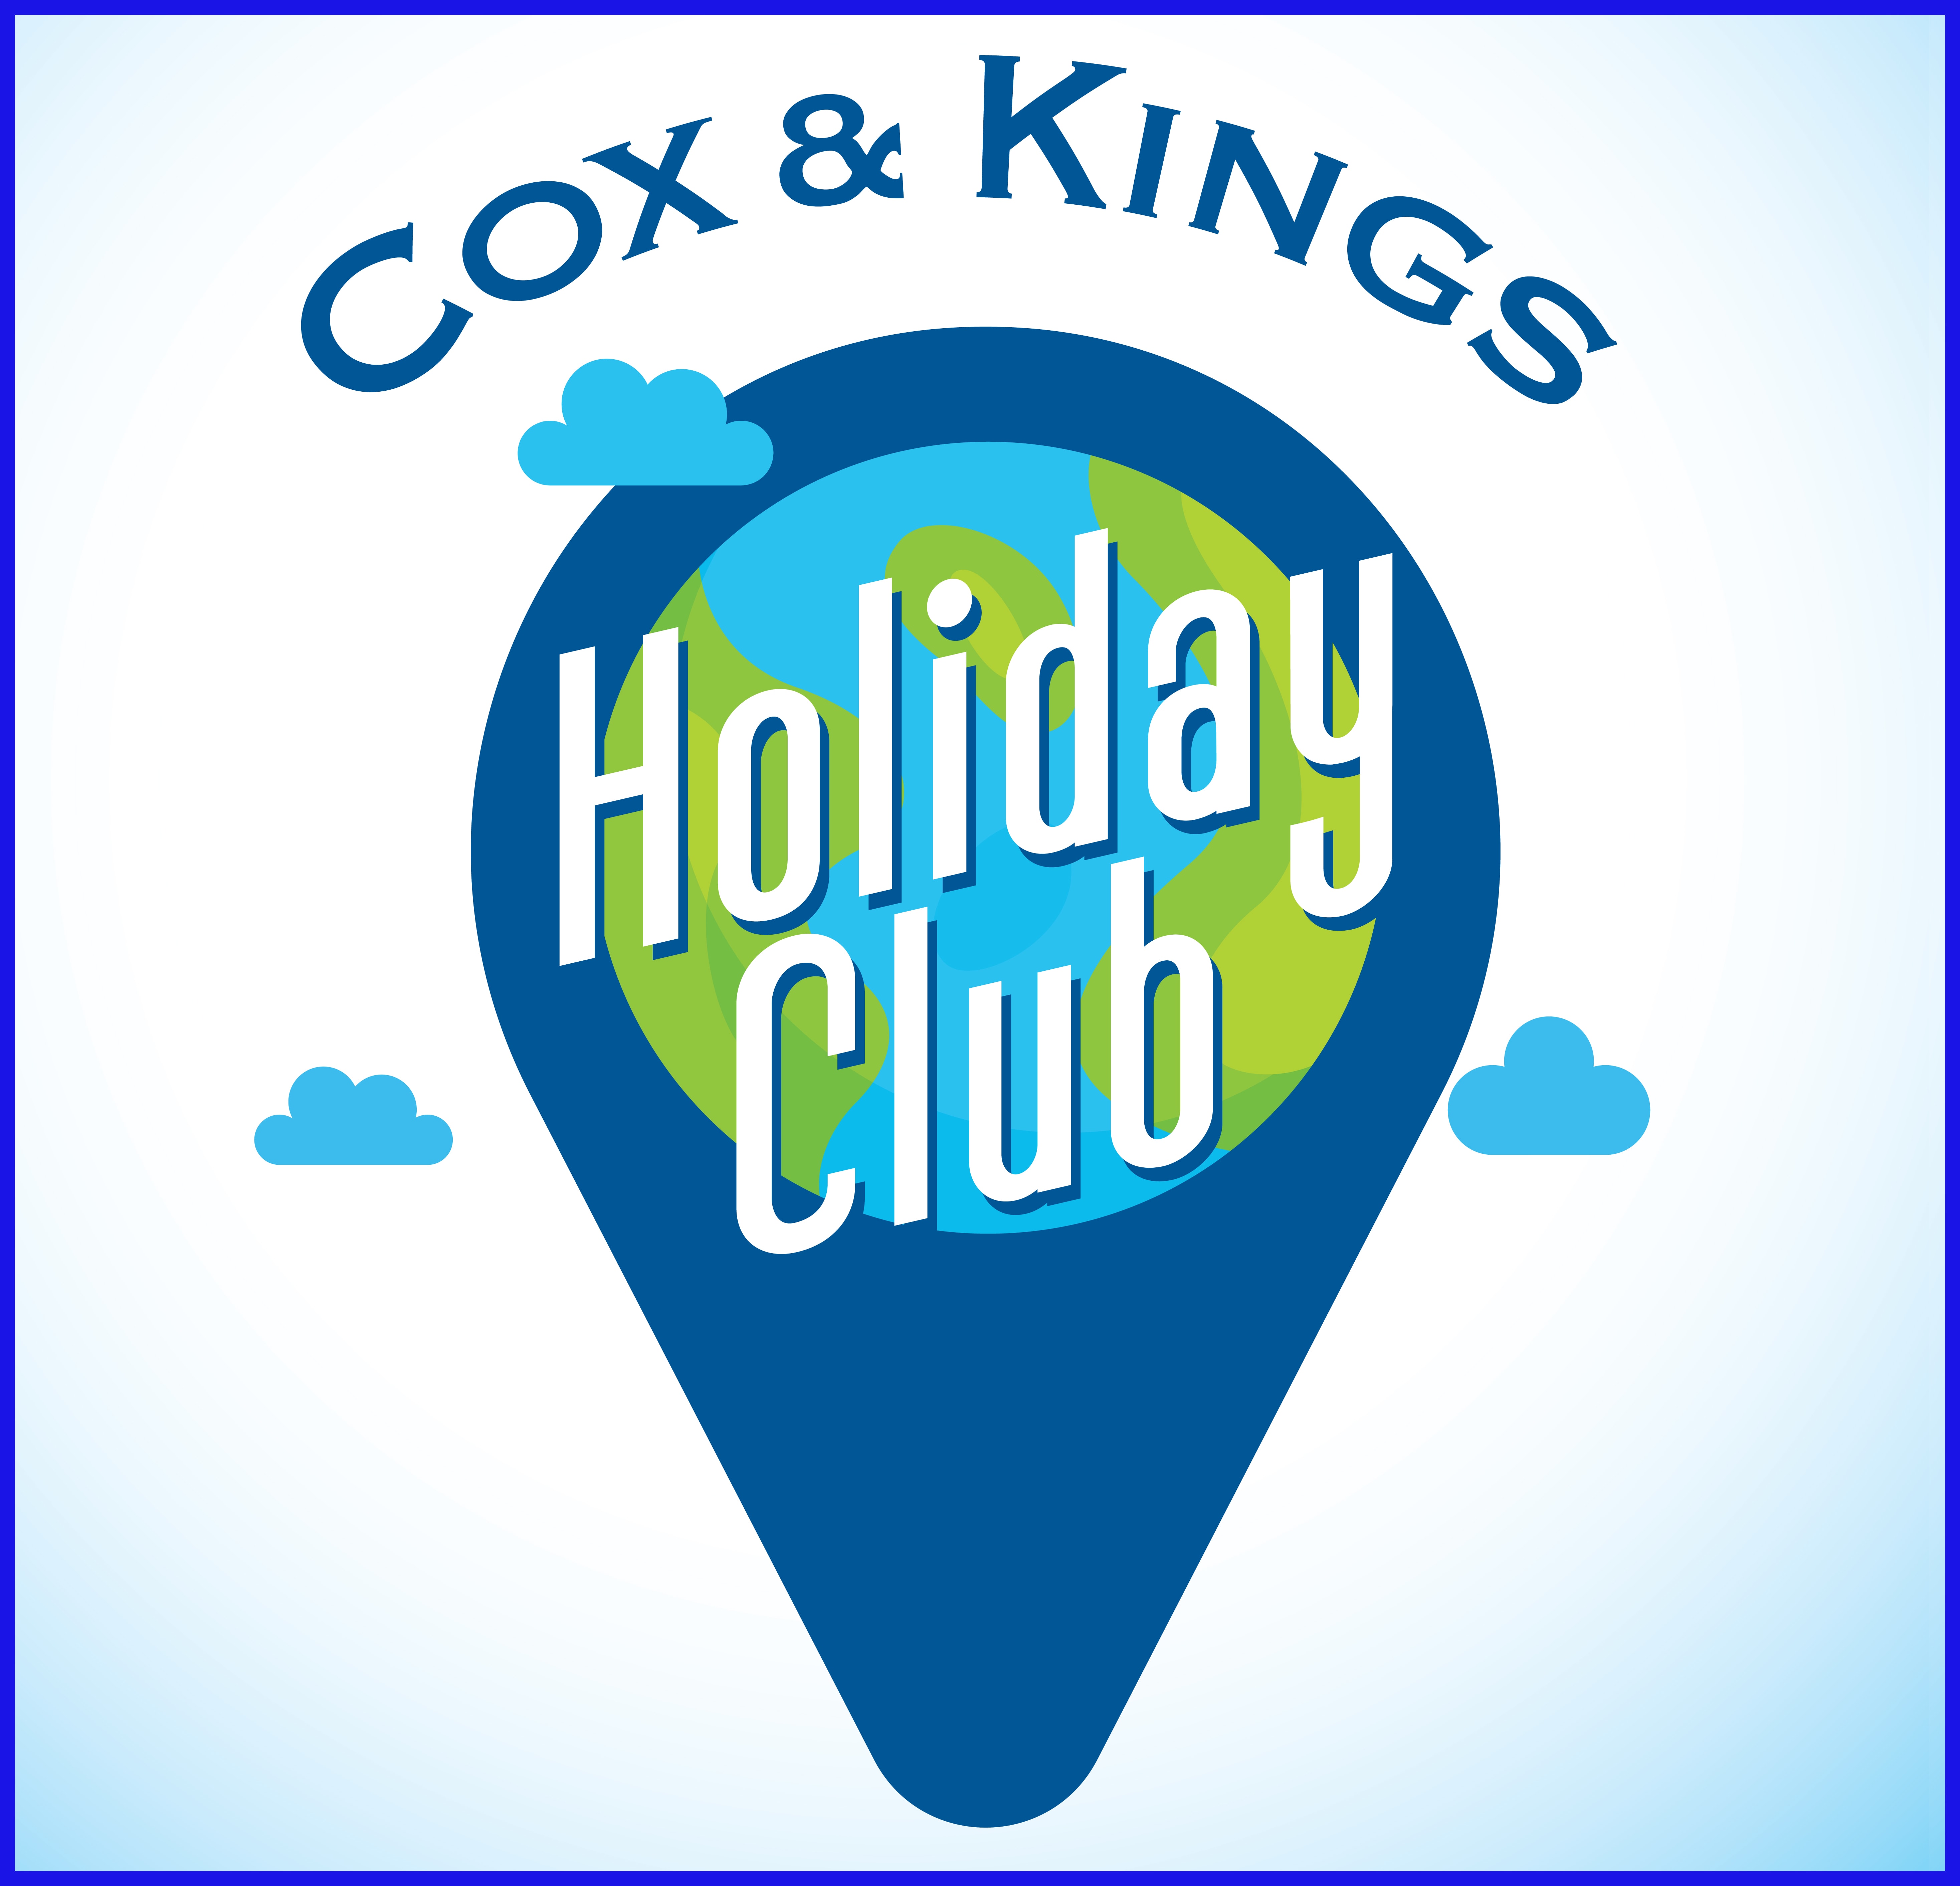 Cox Kings Holiday Club In Rajouri Garden Delhi 110027 Sulekha